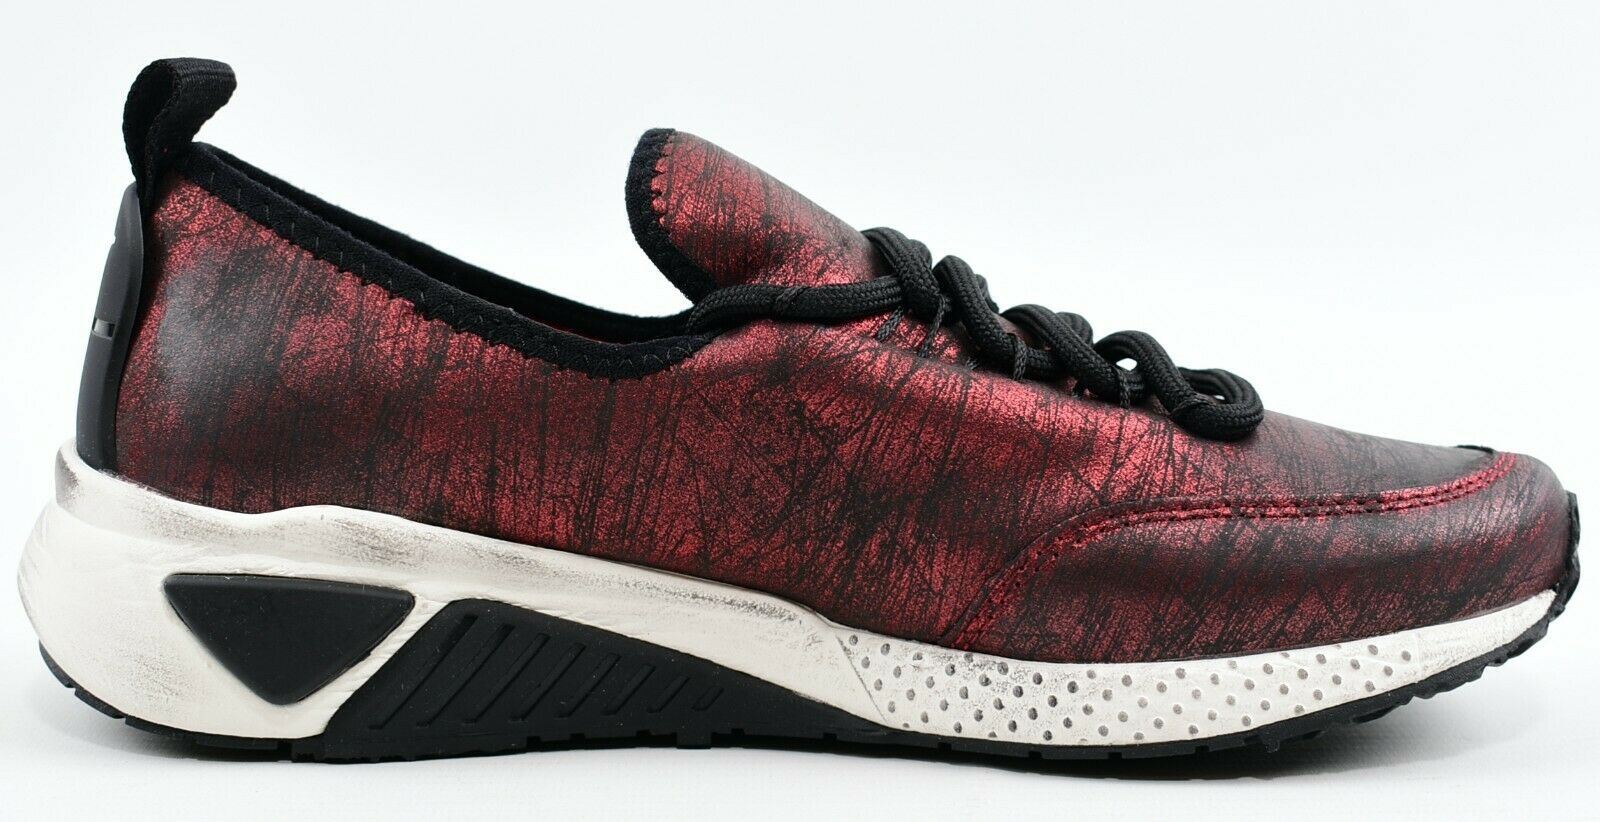 DIESEL S-KBY Women's Trainers Sneakers, Lipstick Red/Black, size UK 3 EU 36